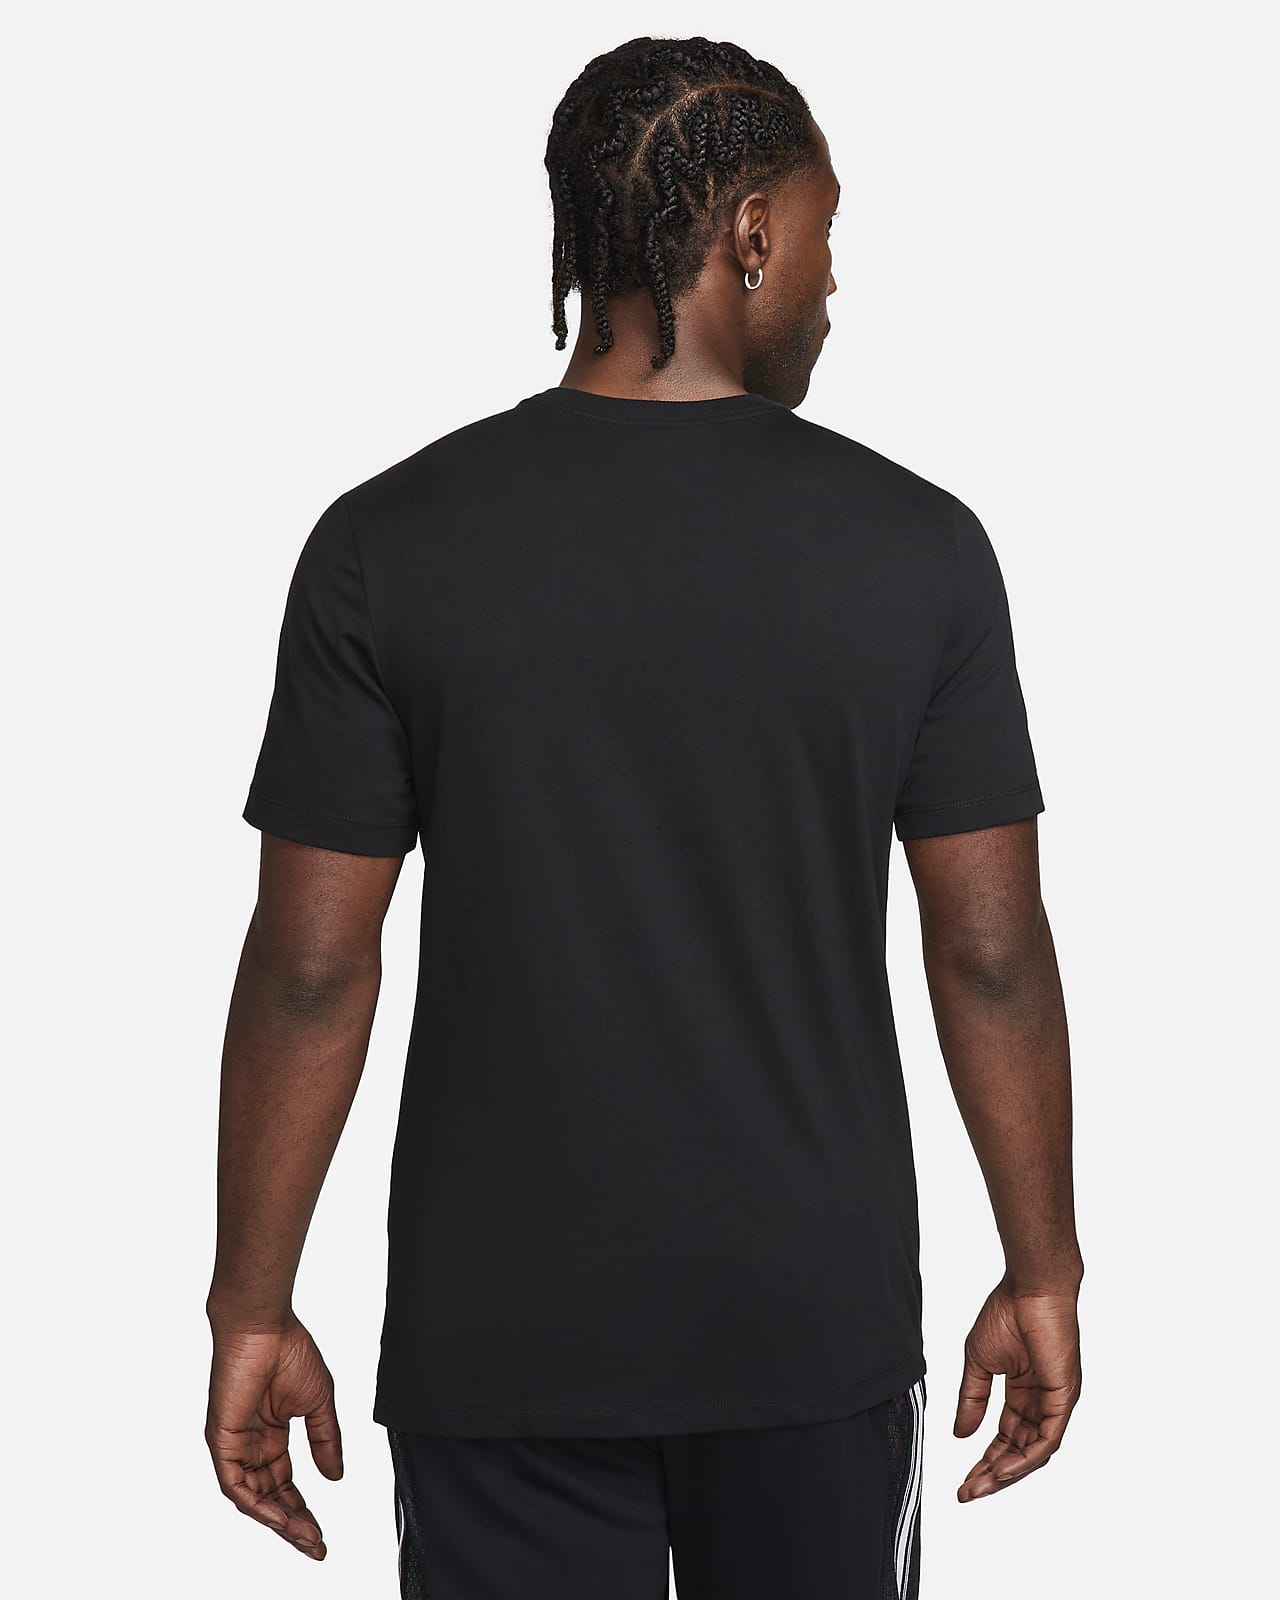 T-shirt Nike Homme Swoosh League Tee